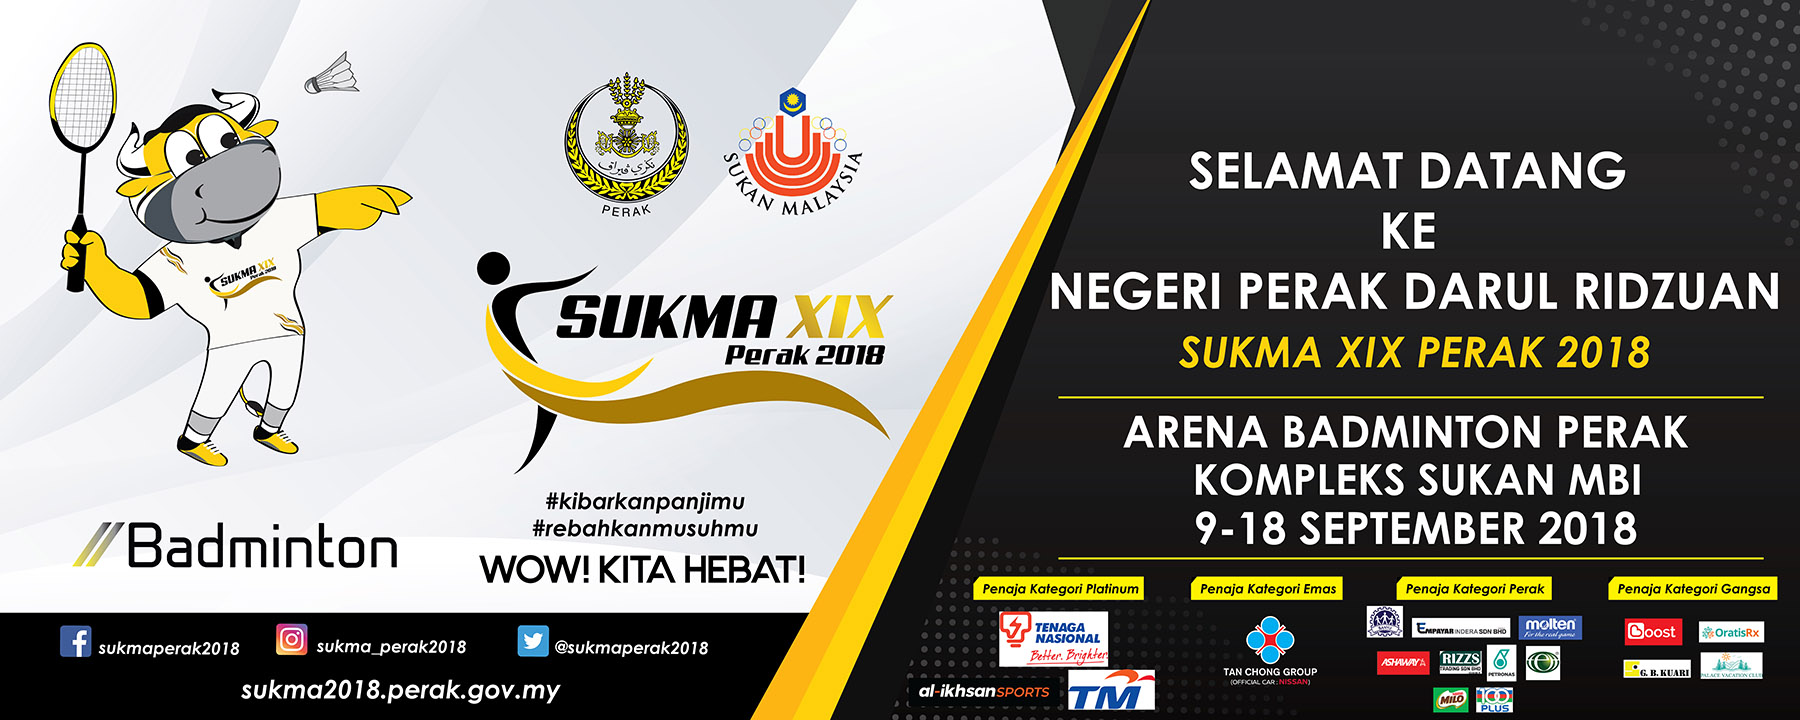 PenyuSukandotcom - Sukan Malaysia SUKMA Perak 2018 - Badminton